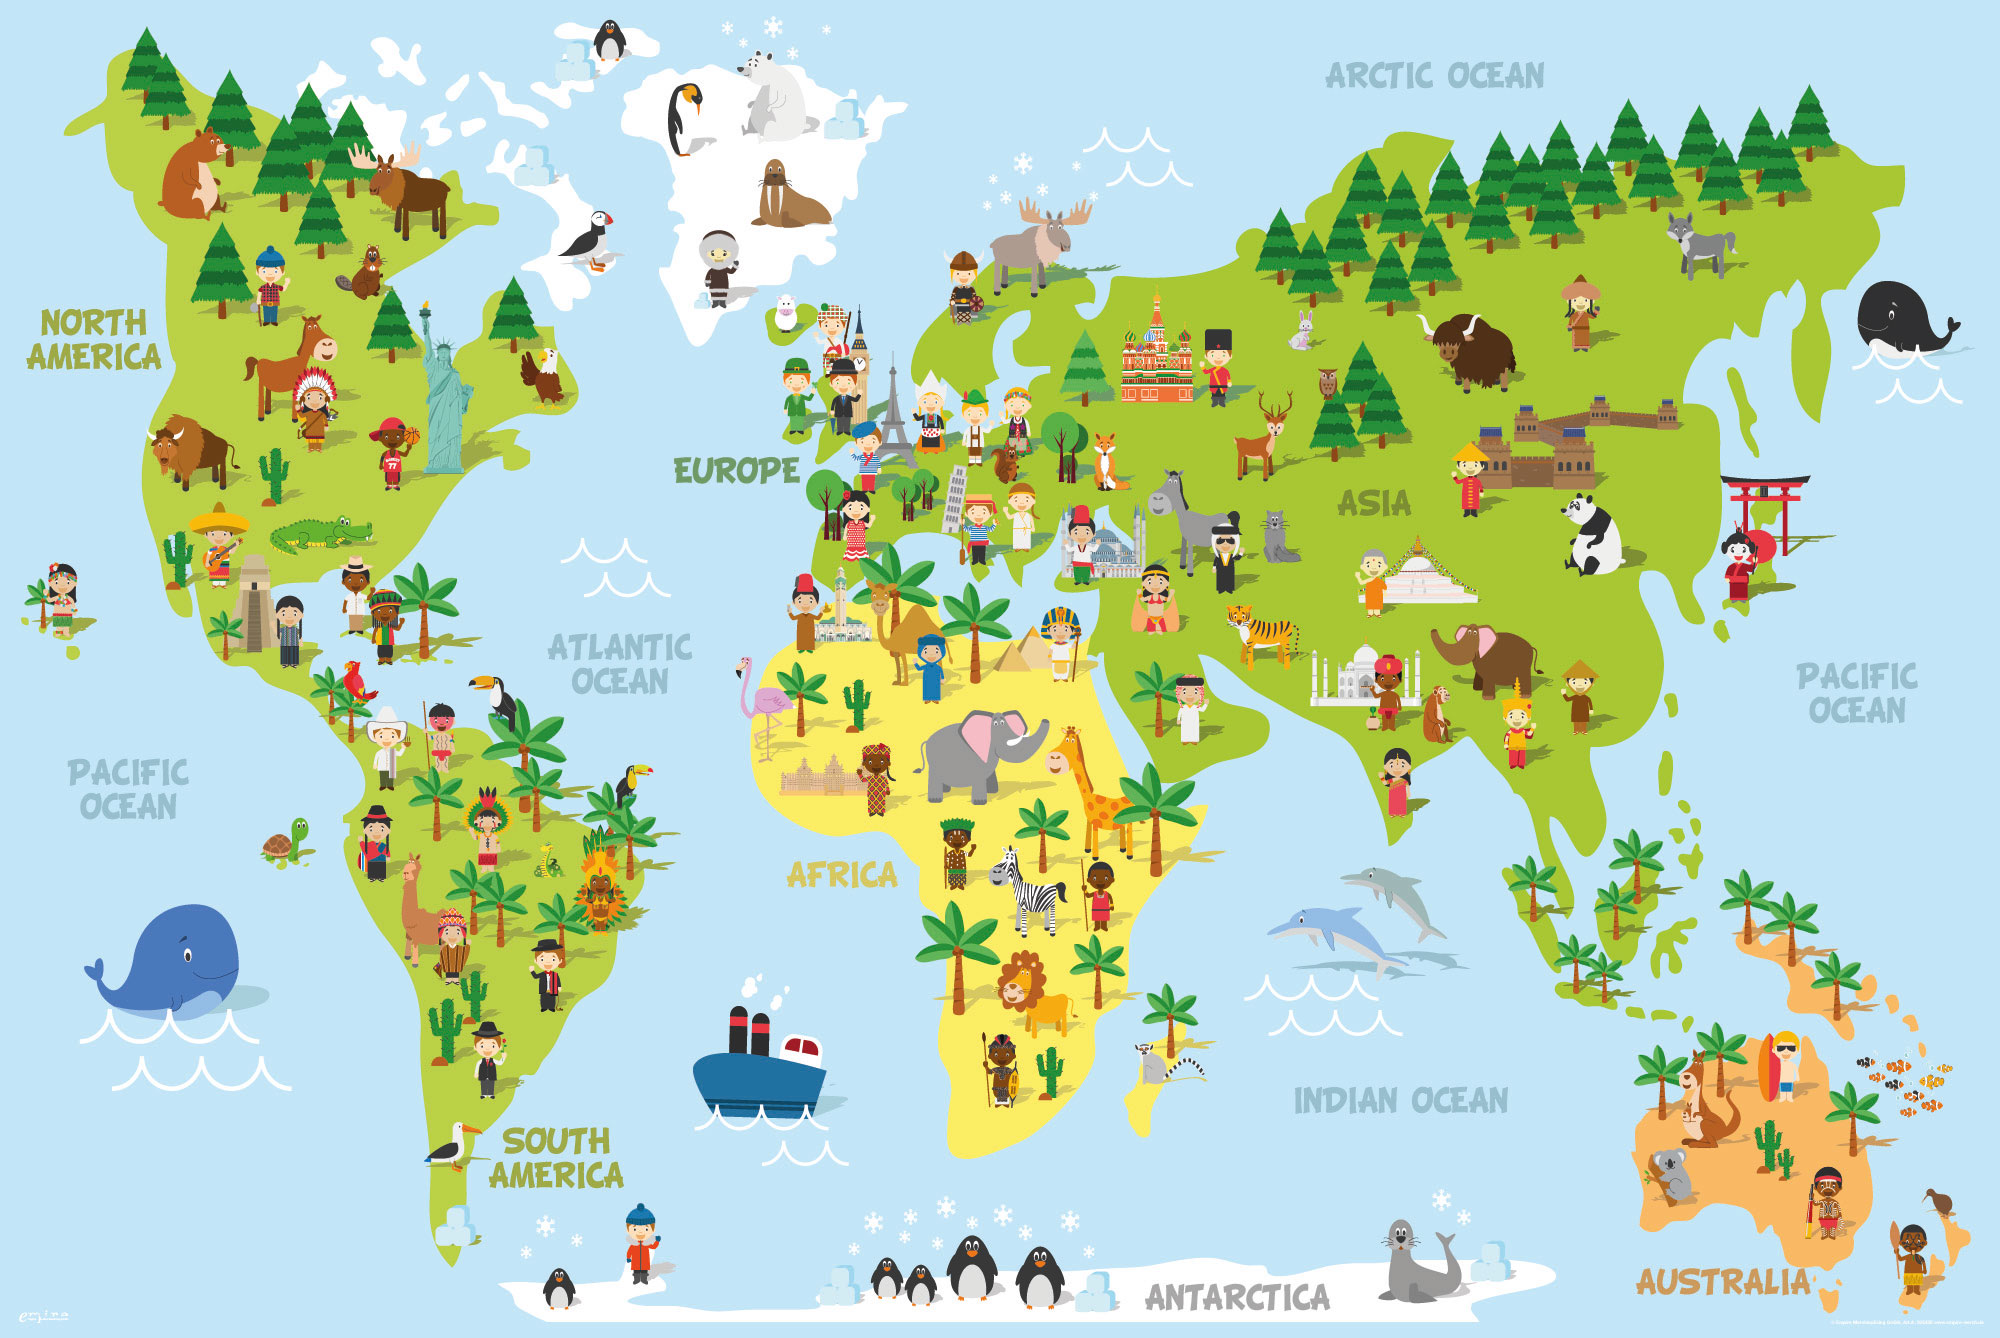 Kinderweltkarte - World Children’s Map